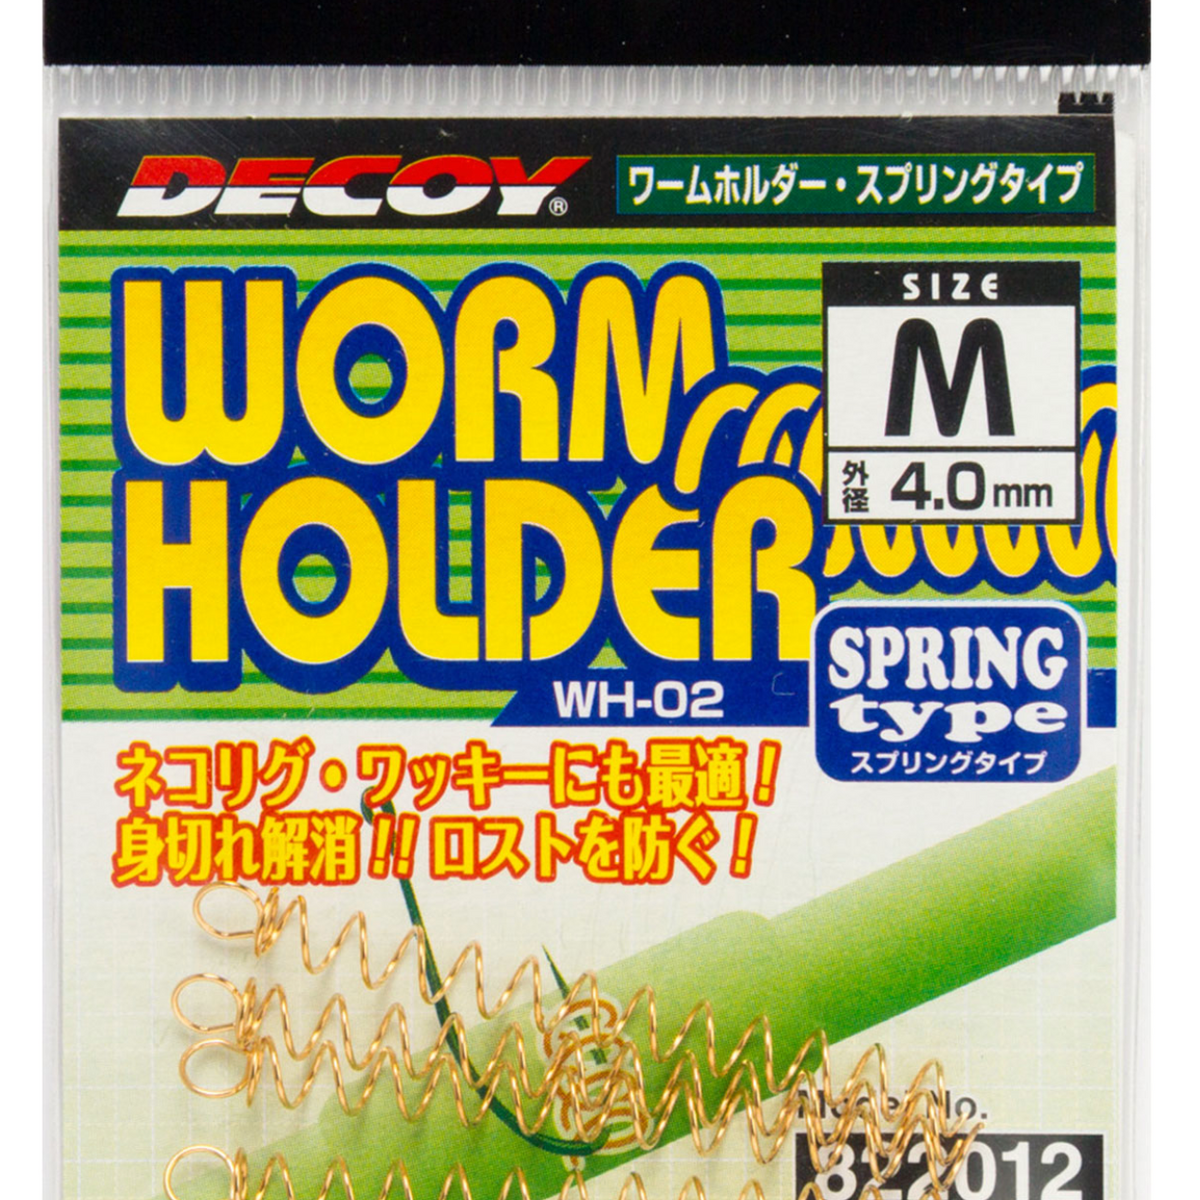 Decoy WH-02 Worm Holder Spring